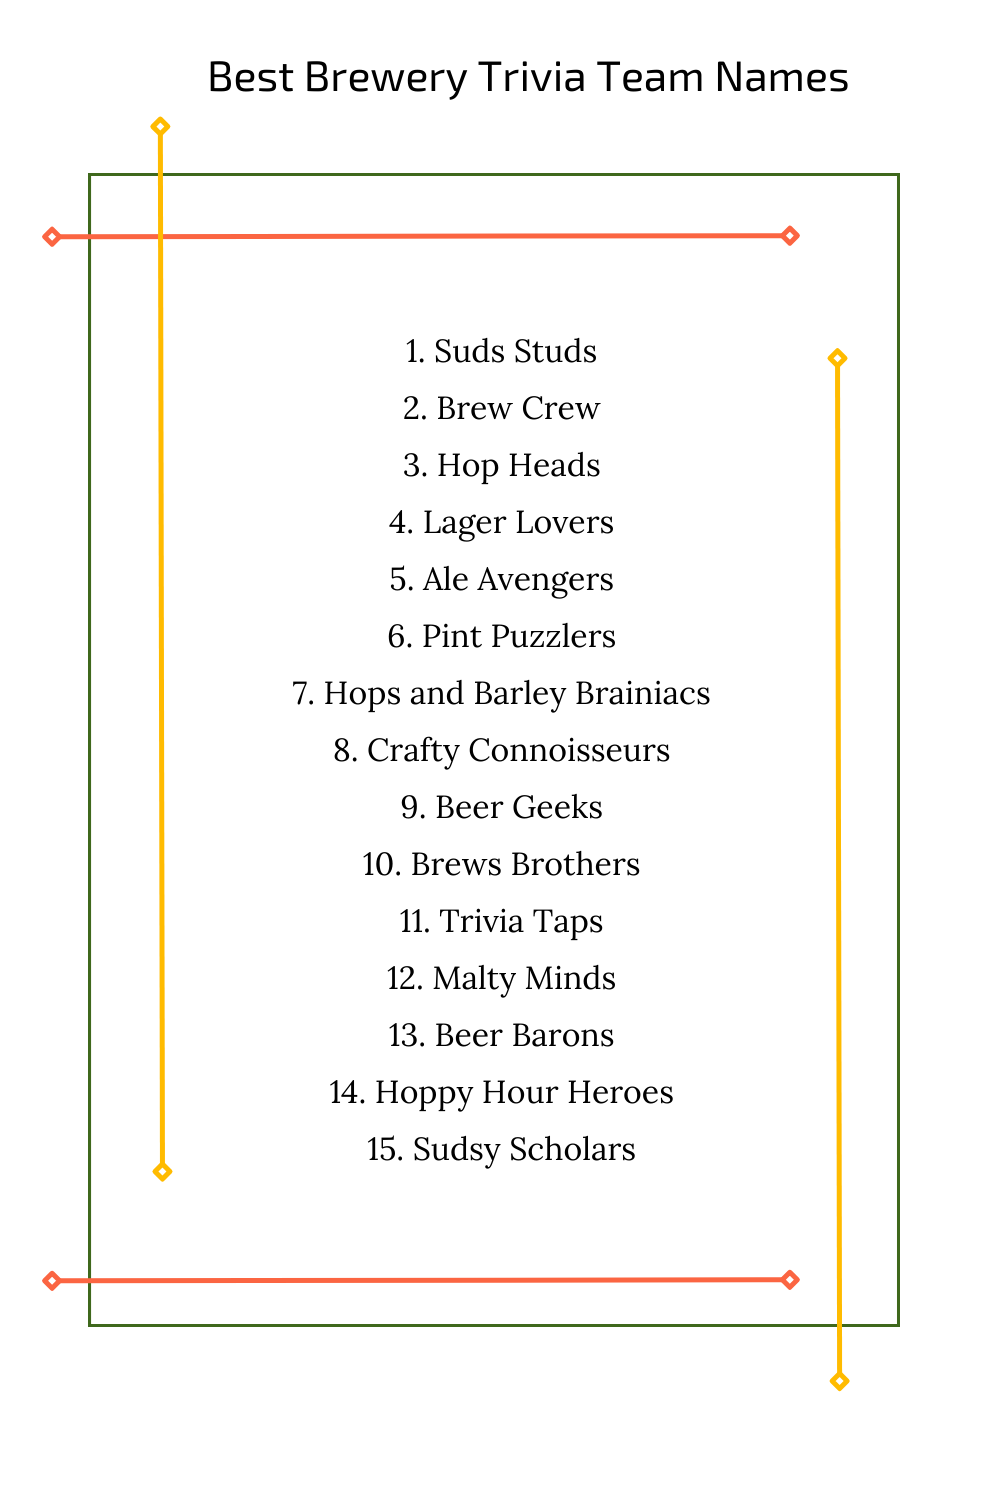 Best Brewery Trivia Team Names